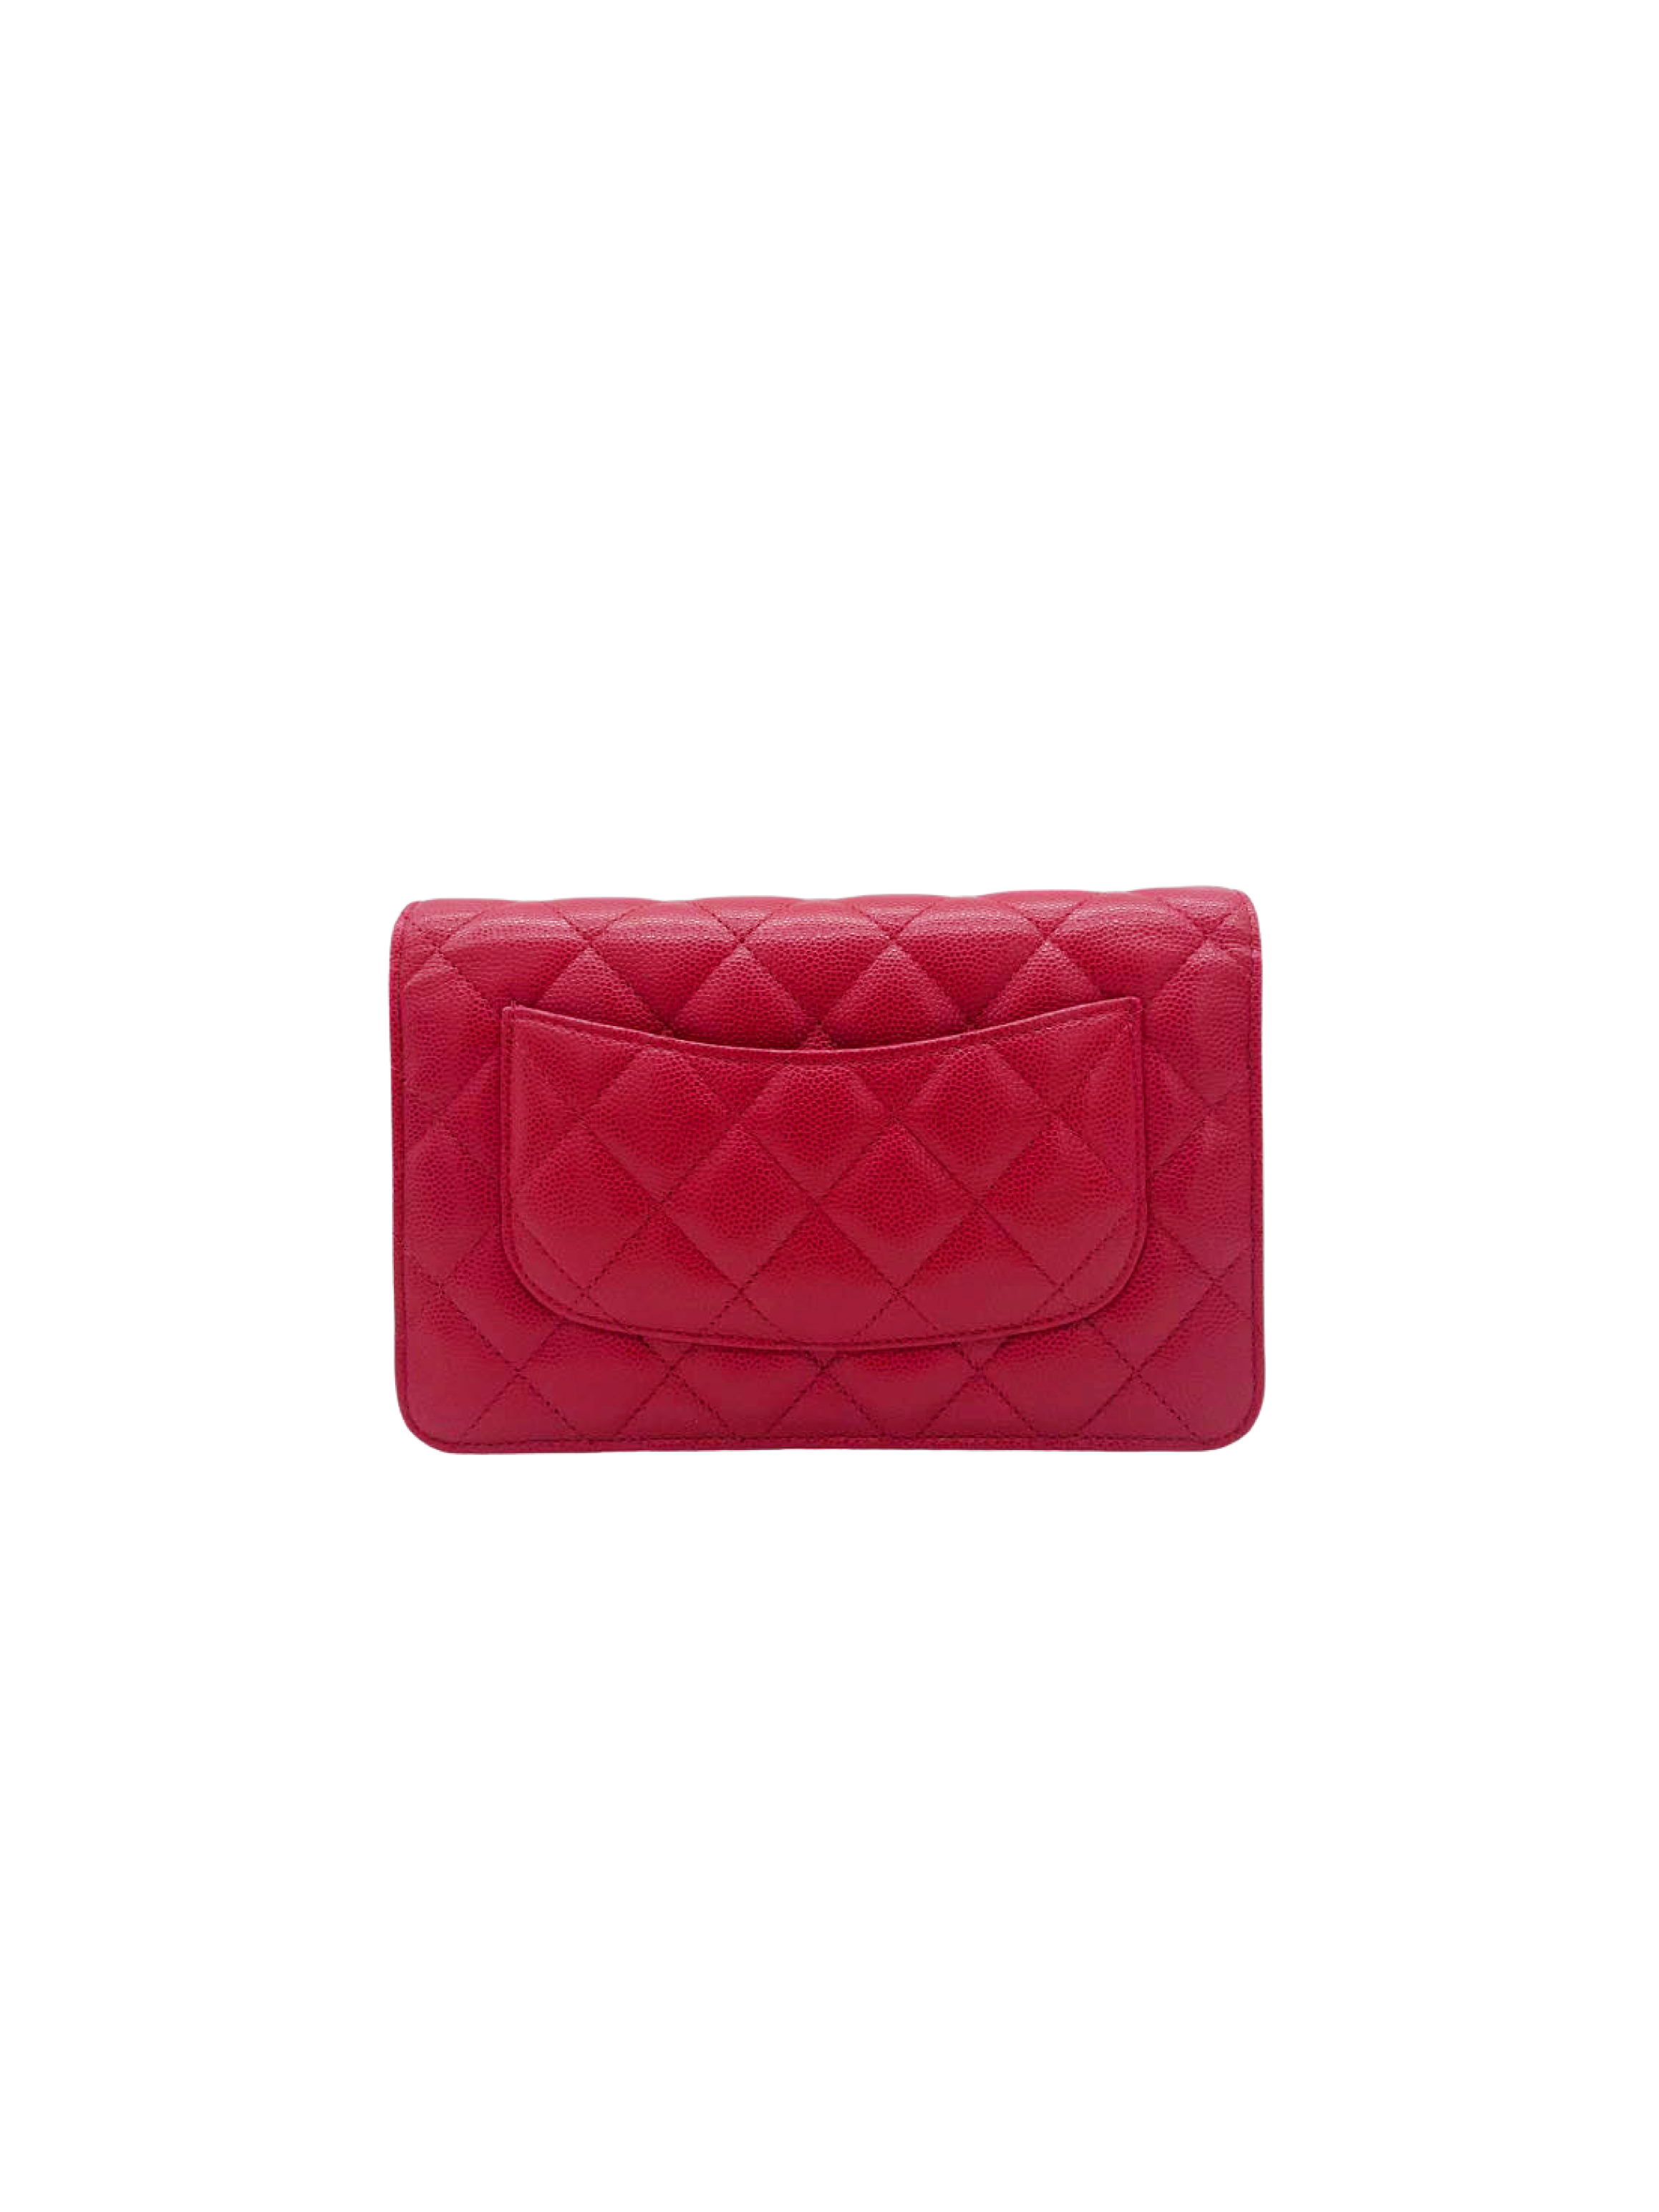 Chanel 2016 Red Matrasse Caviar Skin Silver Chain Wallet Bag